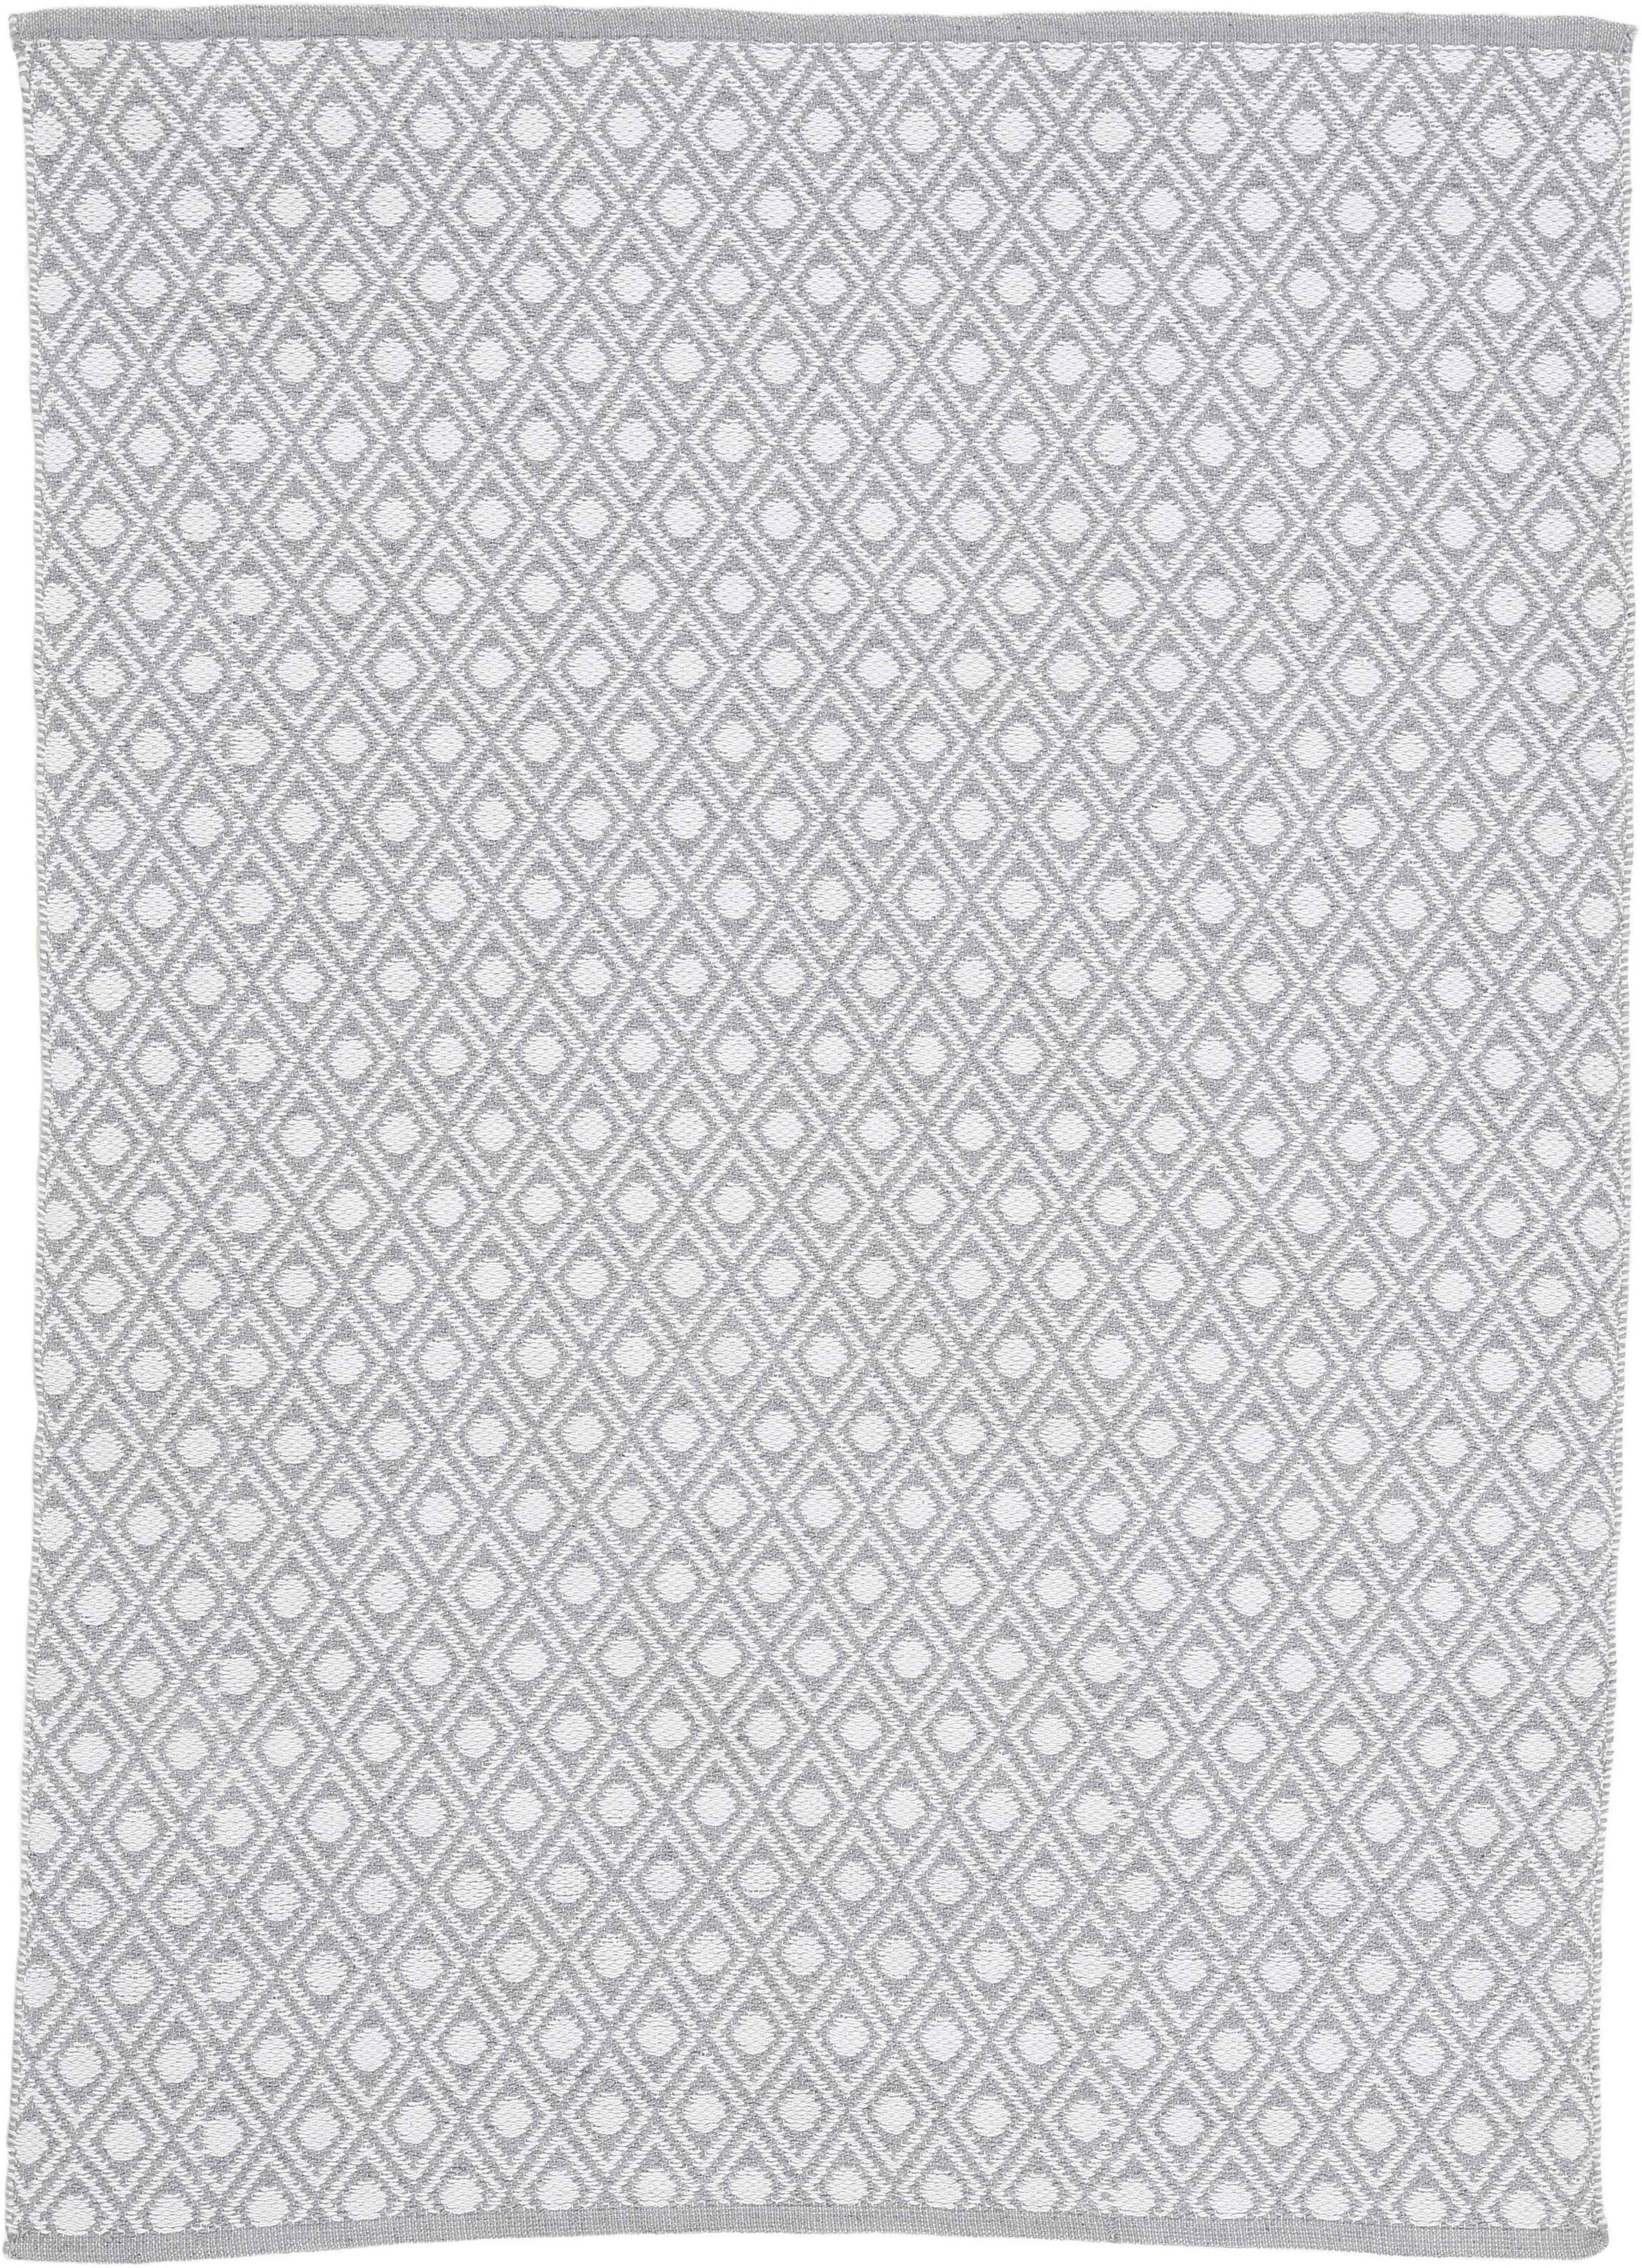 Teppich Frida 201, carpetfine, rechteckig, Höhe: 7 mm, Wendeteppich, 100% recyceltem Material (PET), Flachgewebe, Sisal Optik